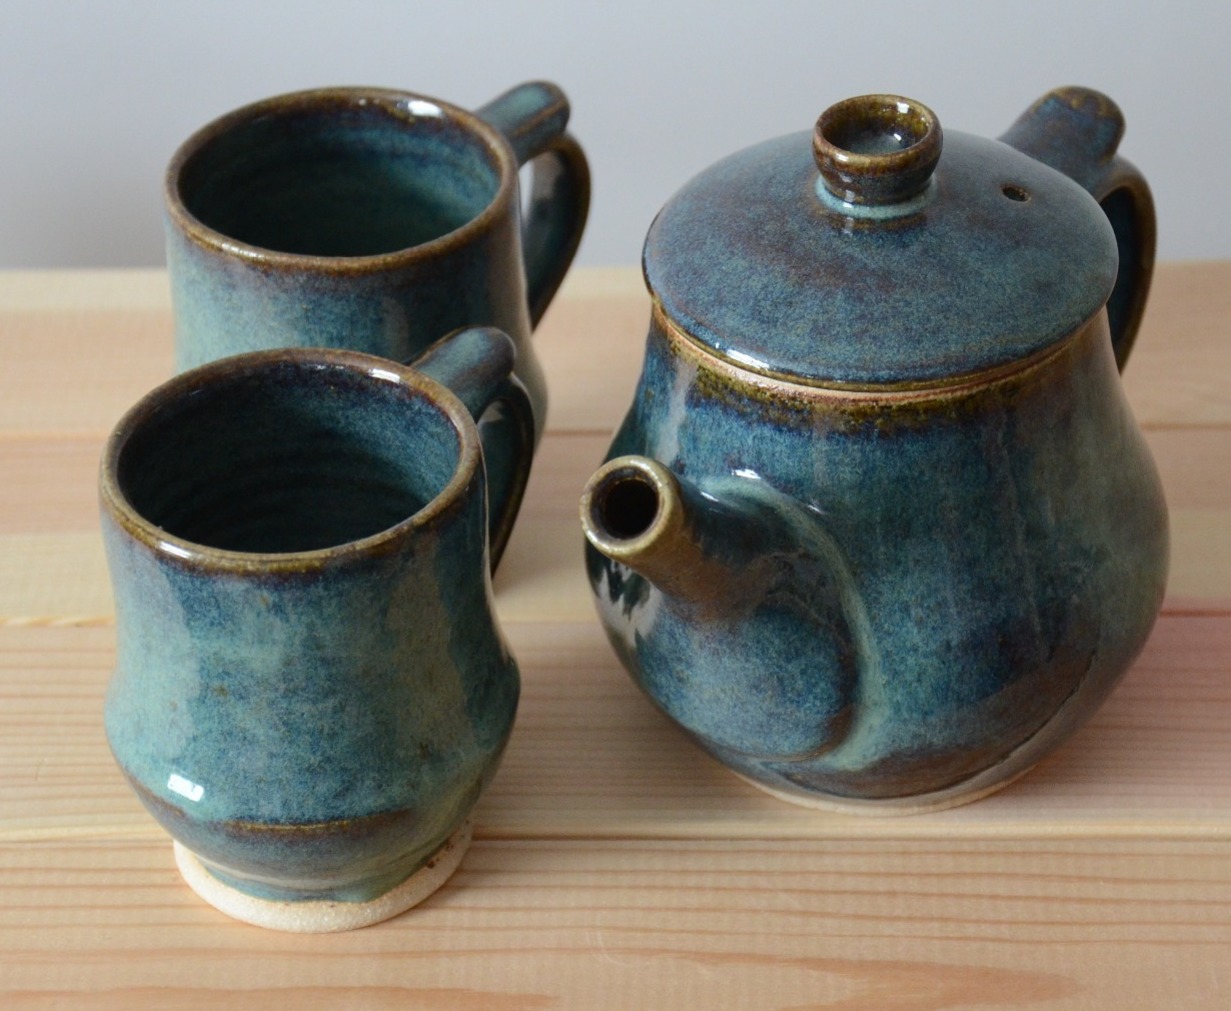 Dominic Upson - a teapot set